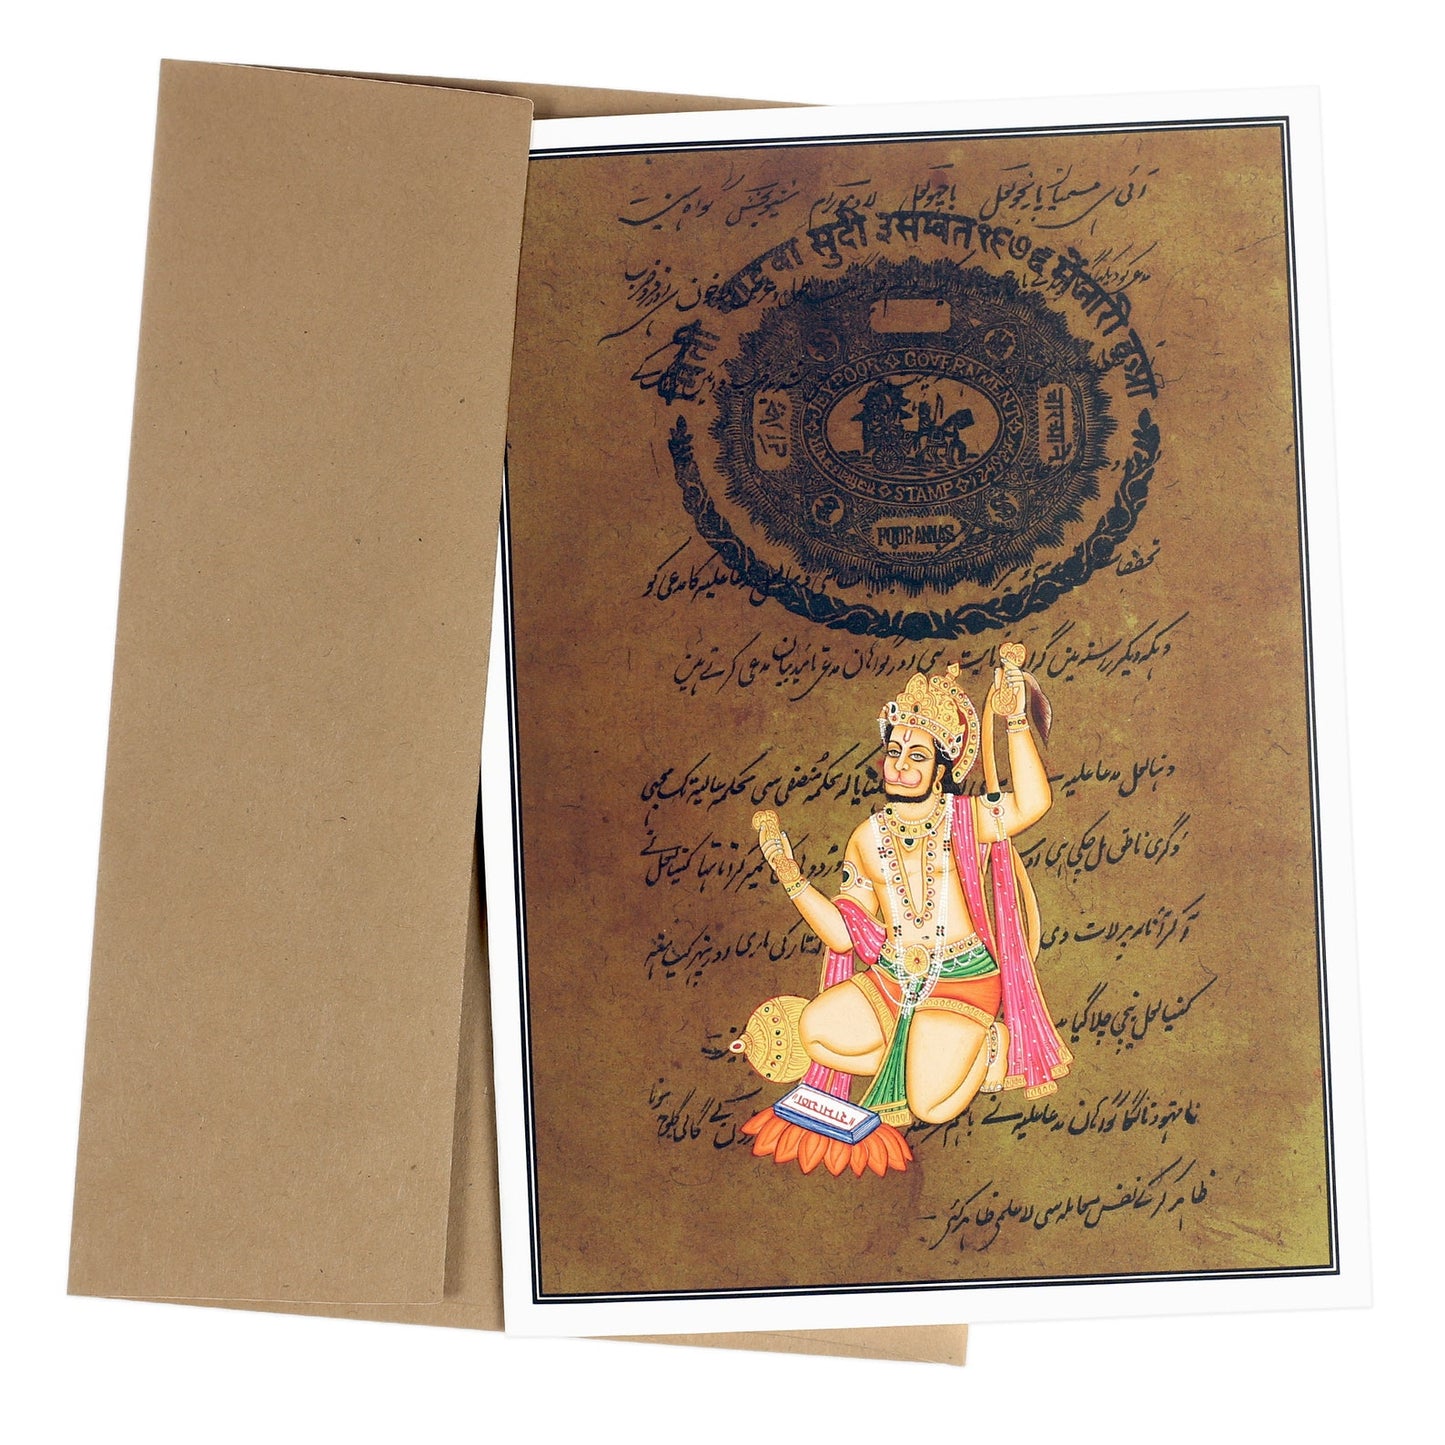 Hanuman Greeting Card - Rajasthani Miniature Painting - Hanuman ji Card 5"x7"